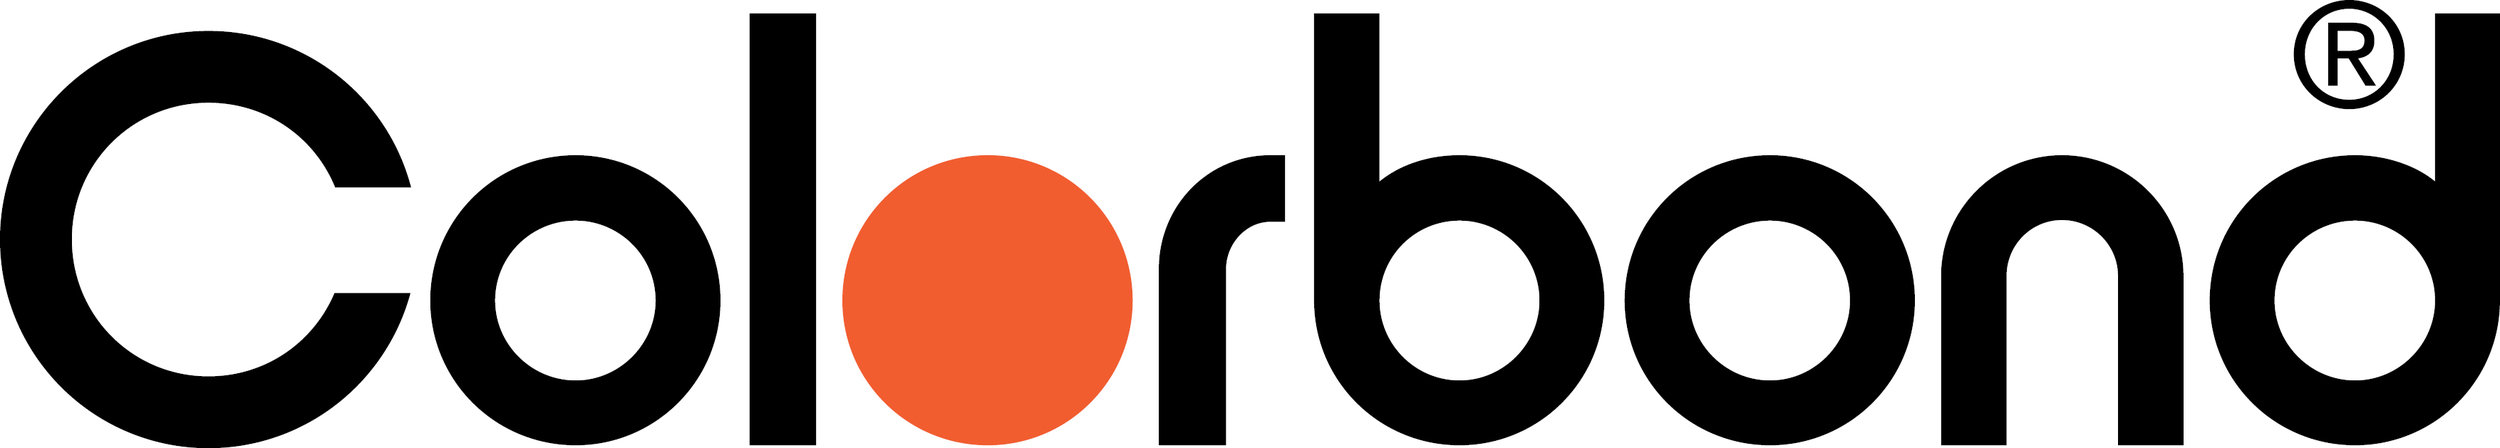 COLORBOND logo.jpg